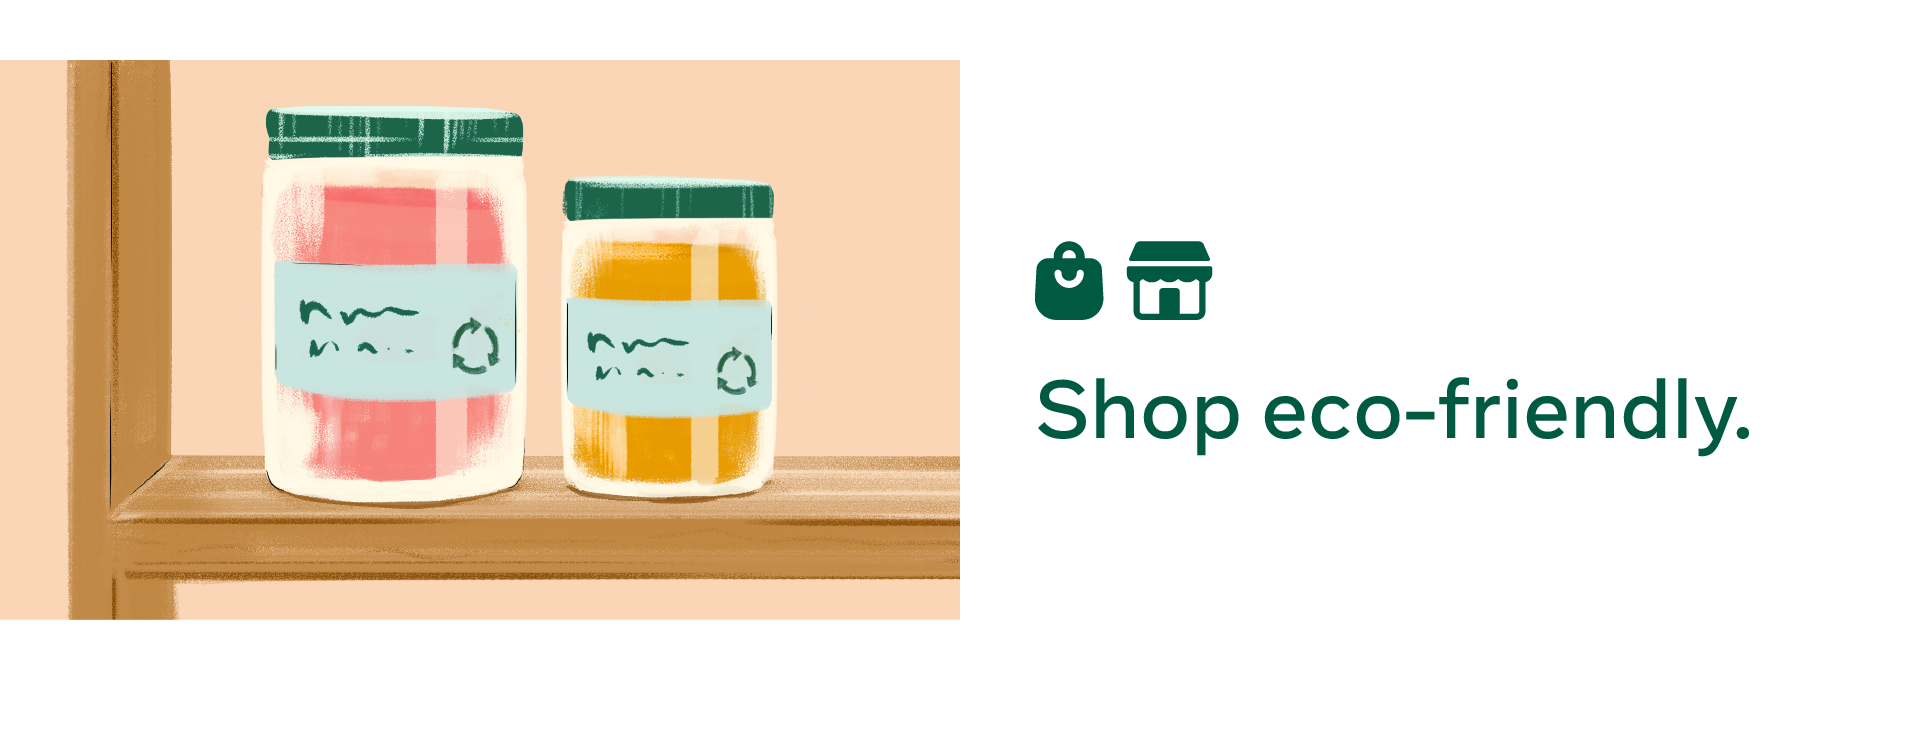 Shop eco-friendly illustration